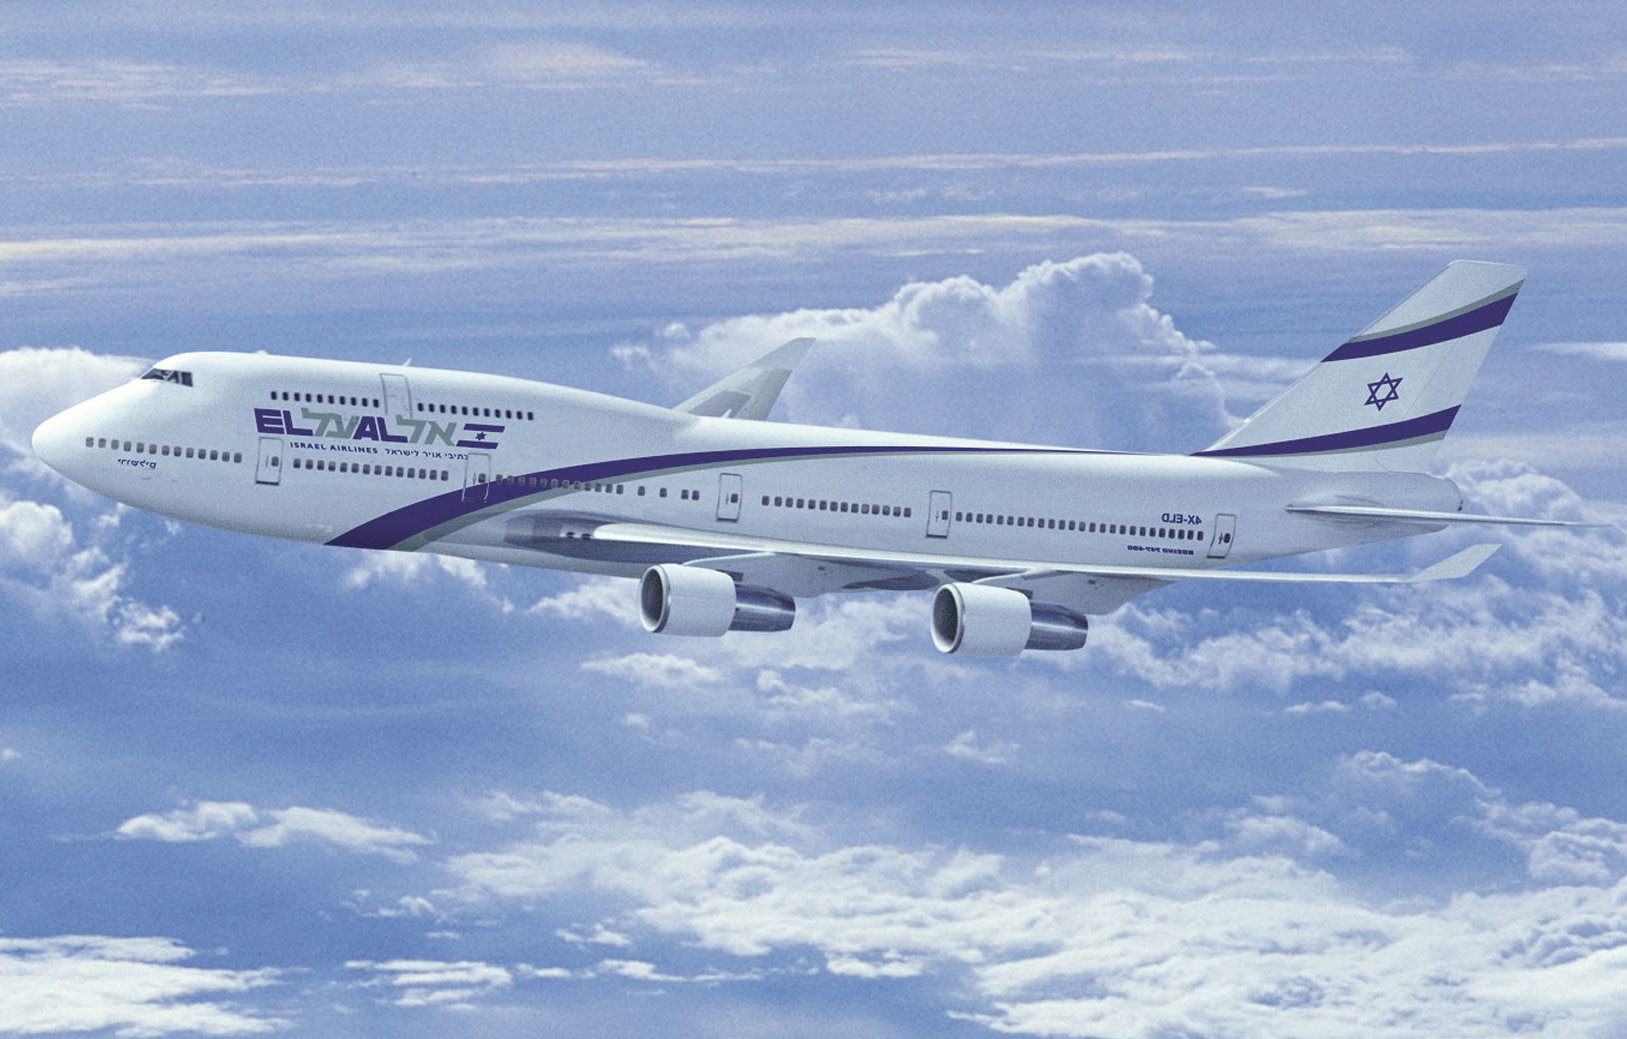 Эль аль на русском. Боинг 747 el al. Израильские авиалинии Боинг 747. Самолёт авиакомпаний Эль Аль.